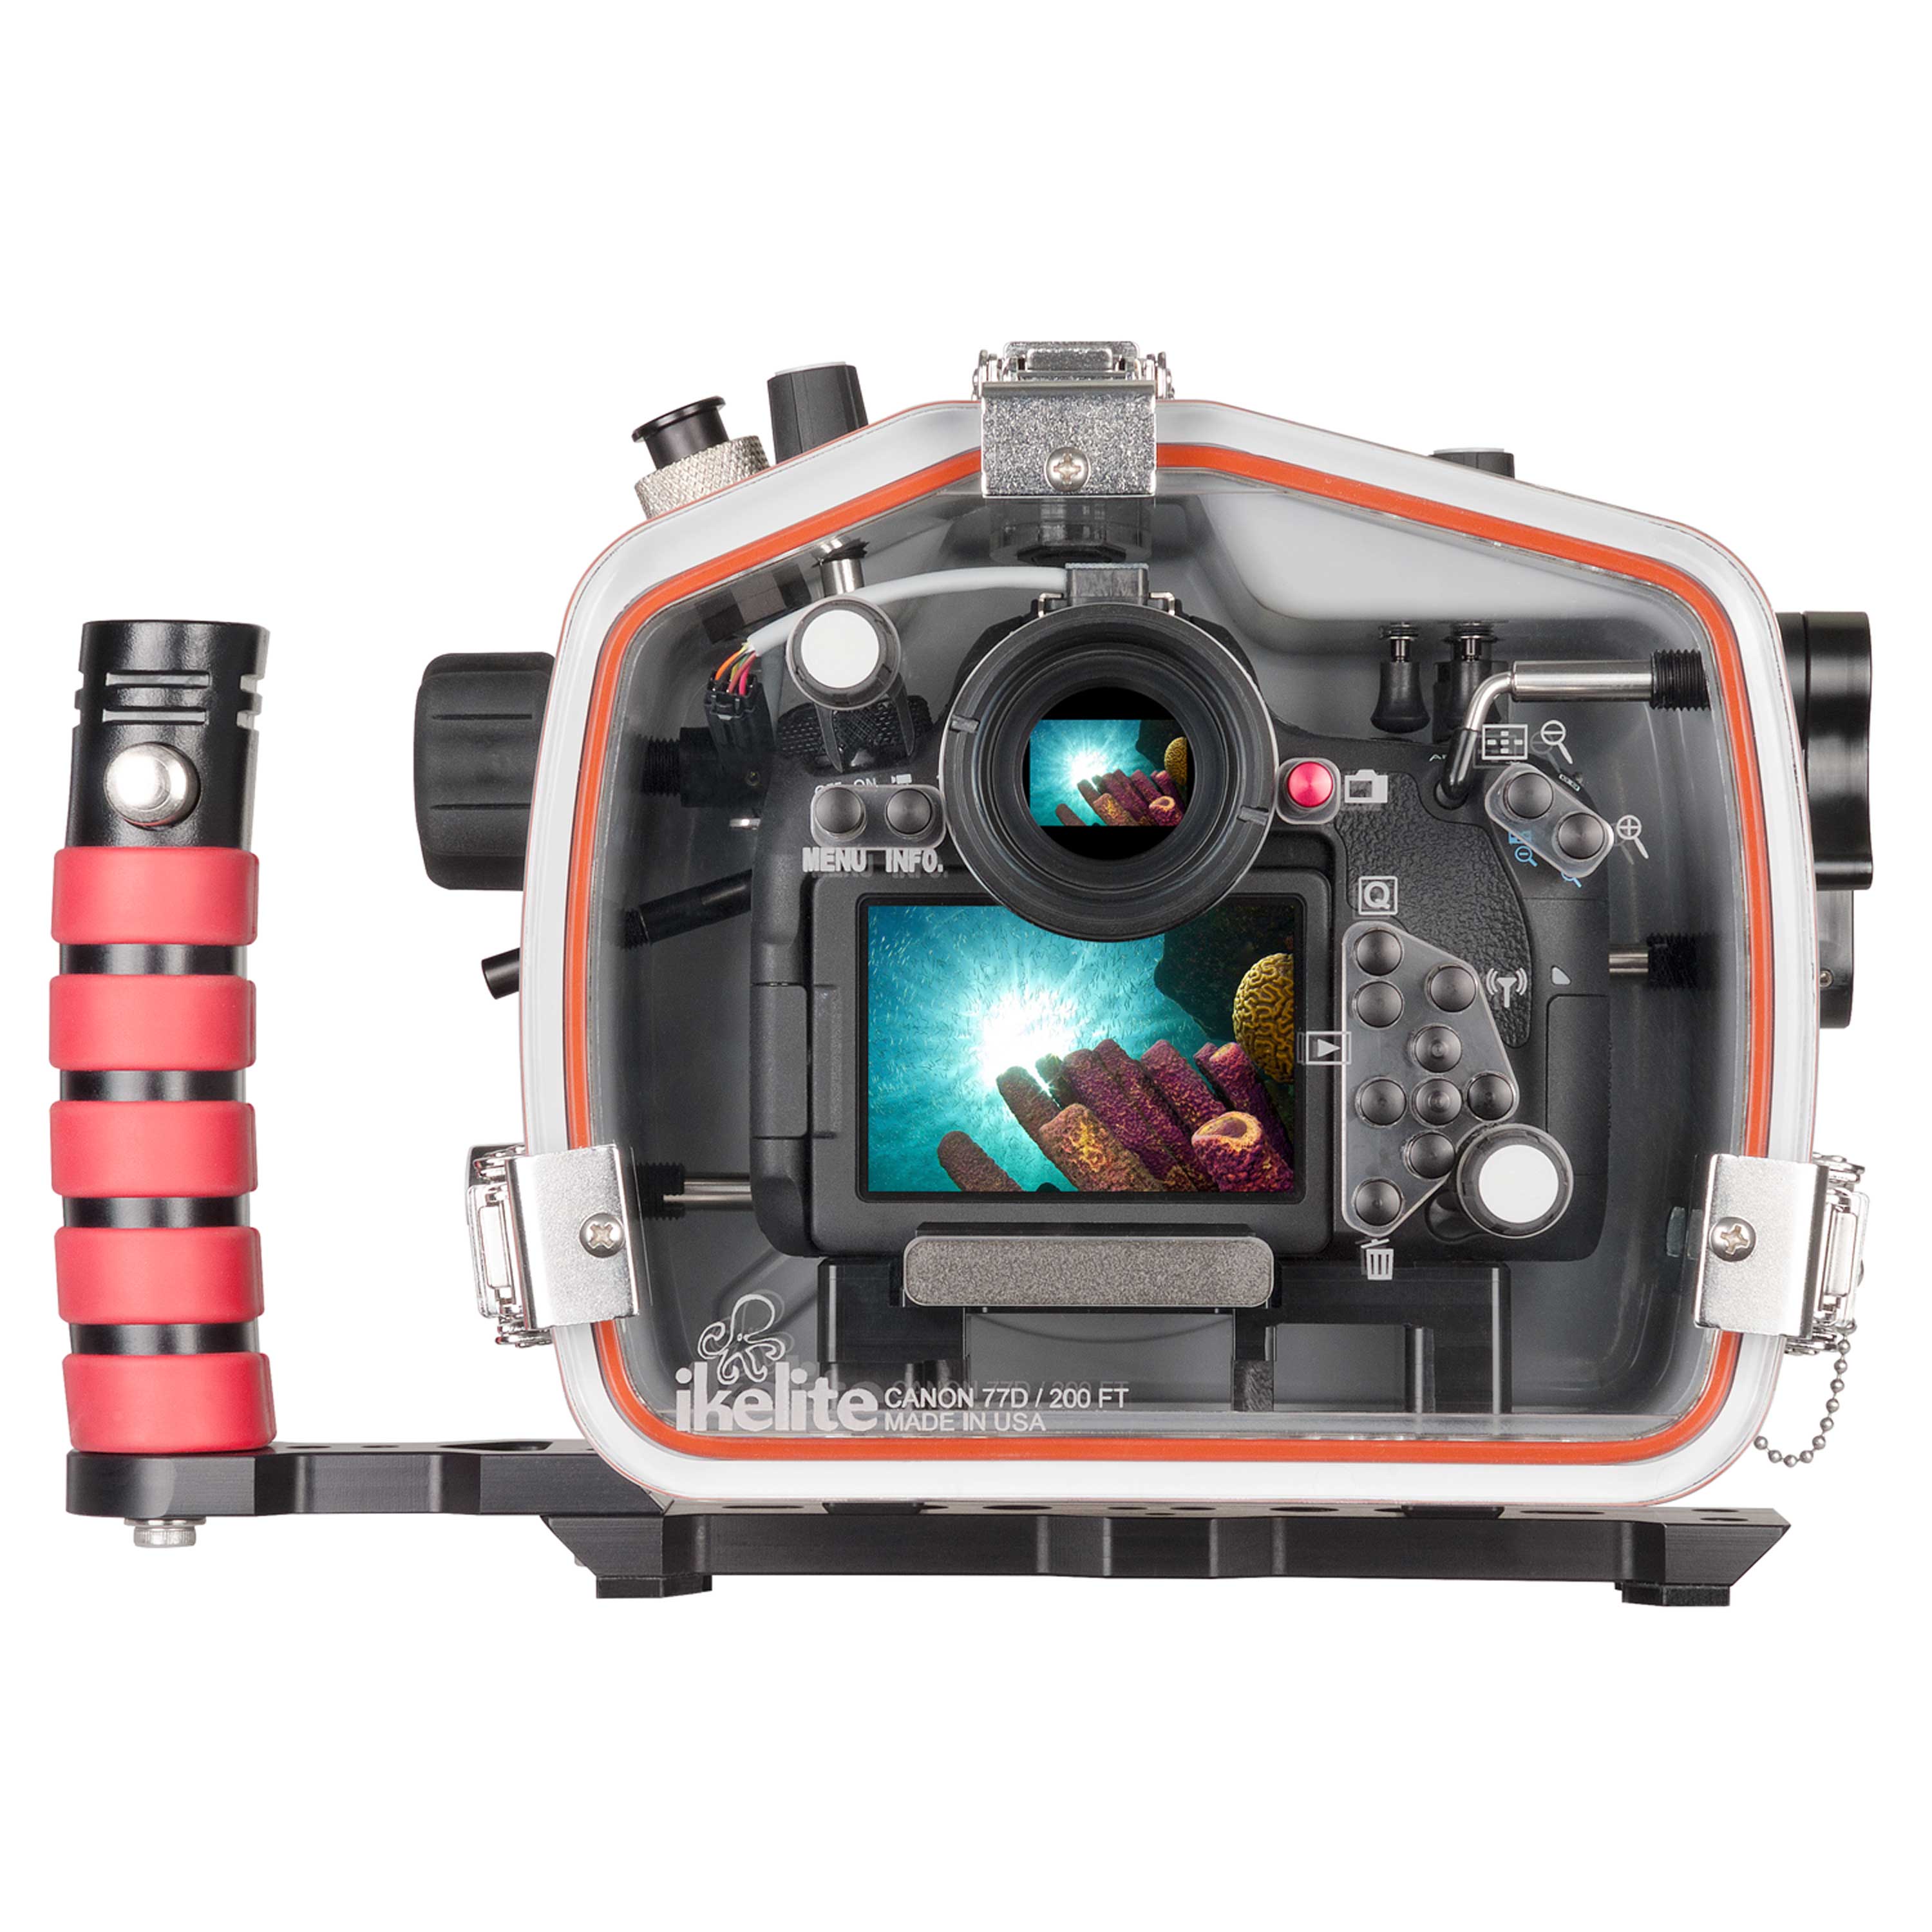 200DL Underwater Housing for Canon EOS 77D, EOS 9000D DSLR Cameras